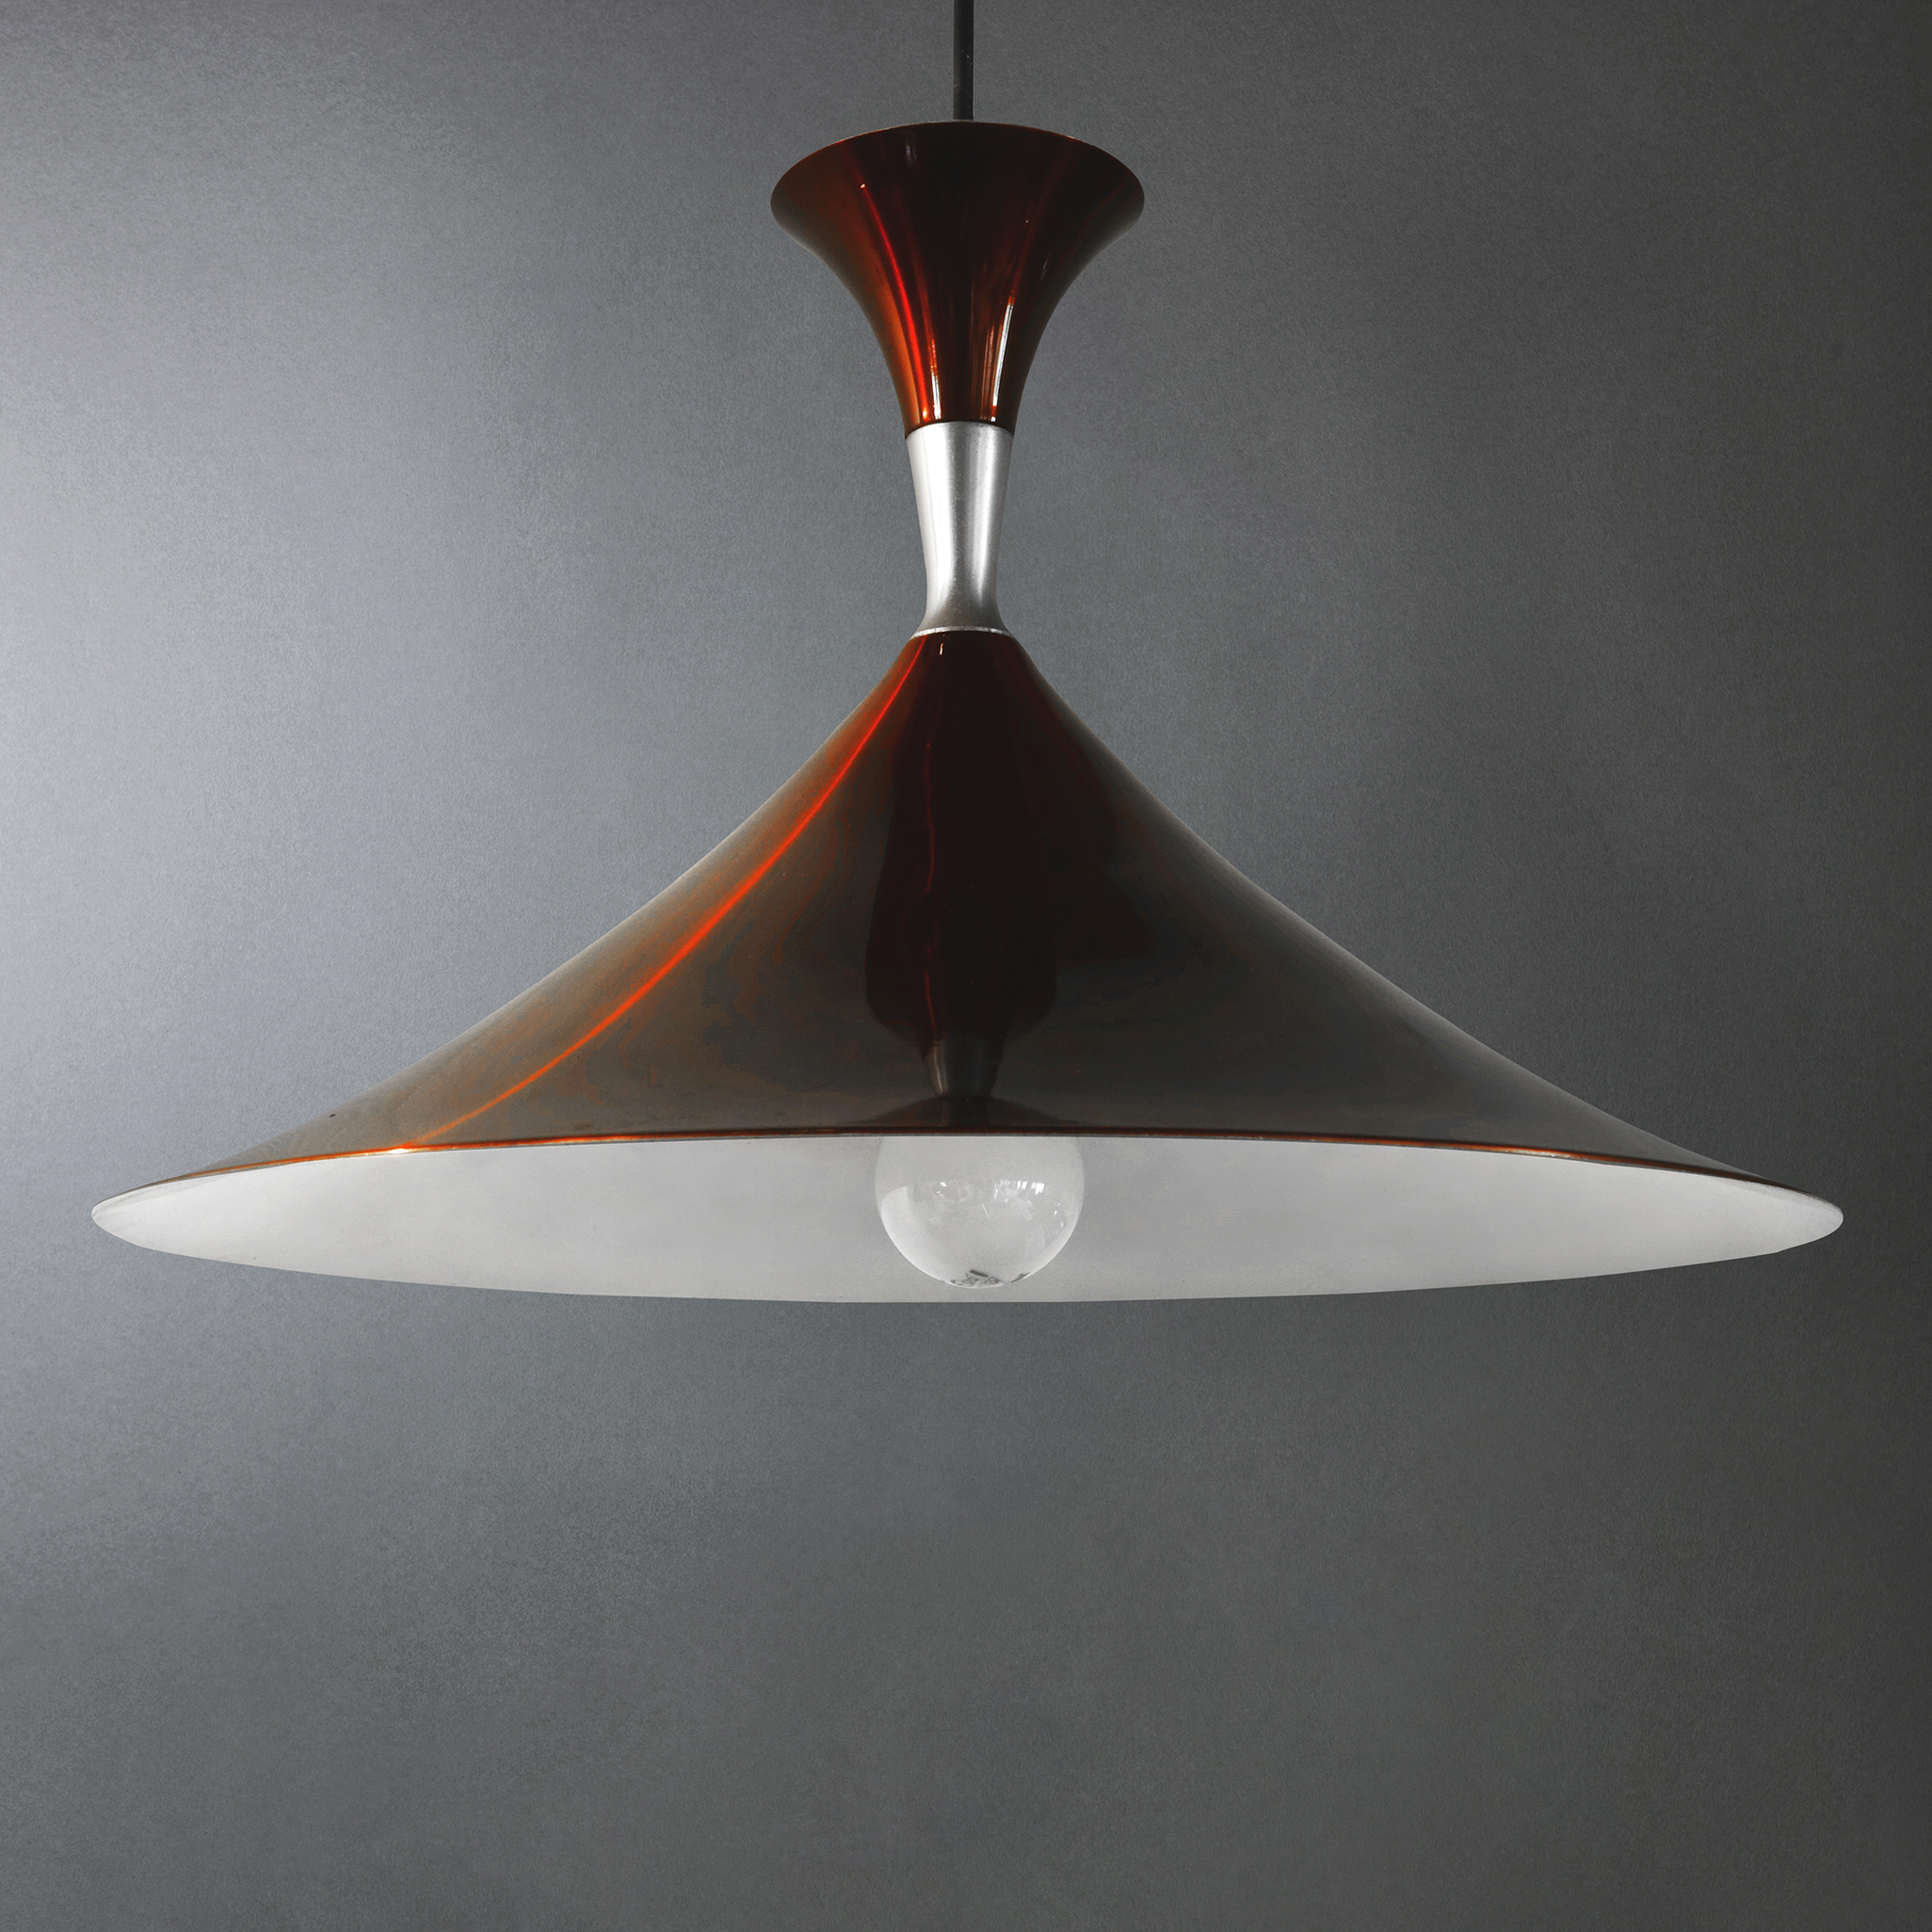 Mooie hanglamp Italie jaren 50-60 | Beautiful dark red hanging lamp Italy 50s-60s - Lasting Living